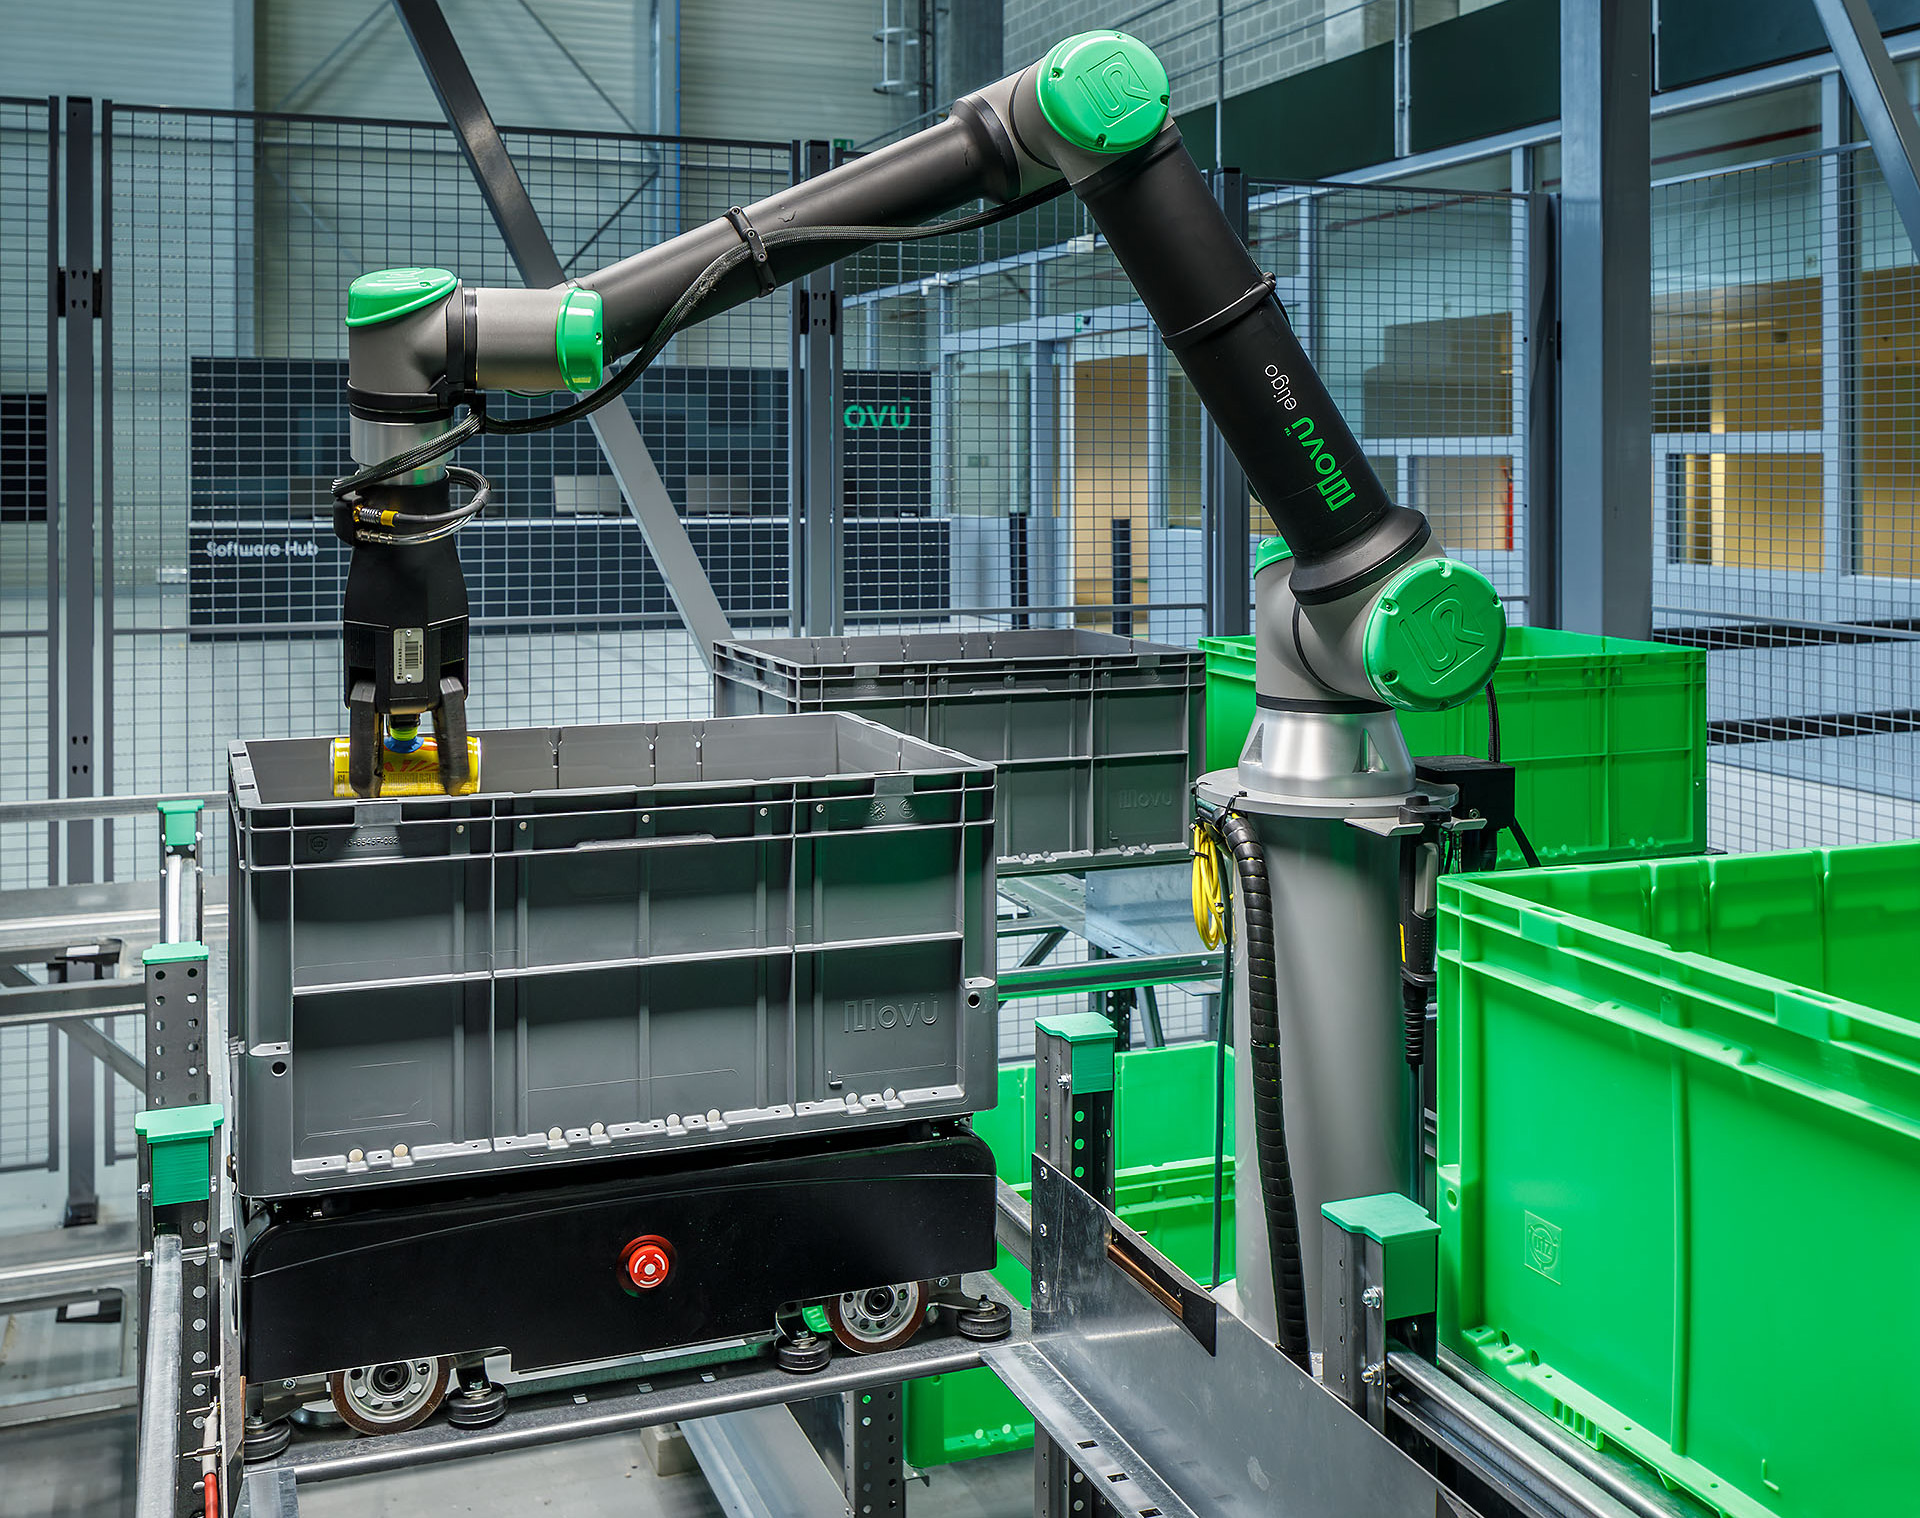 Movu robotics launches a gripping innovation to transform robotic piece picking